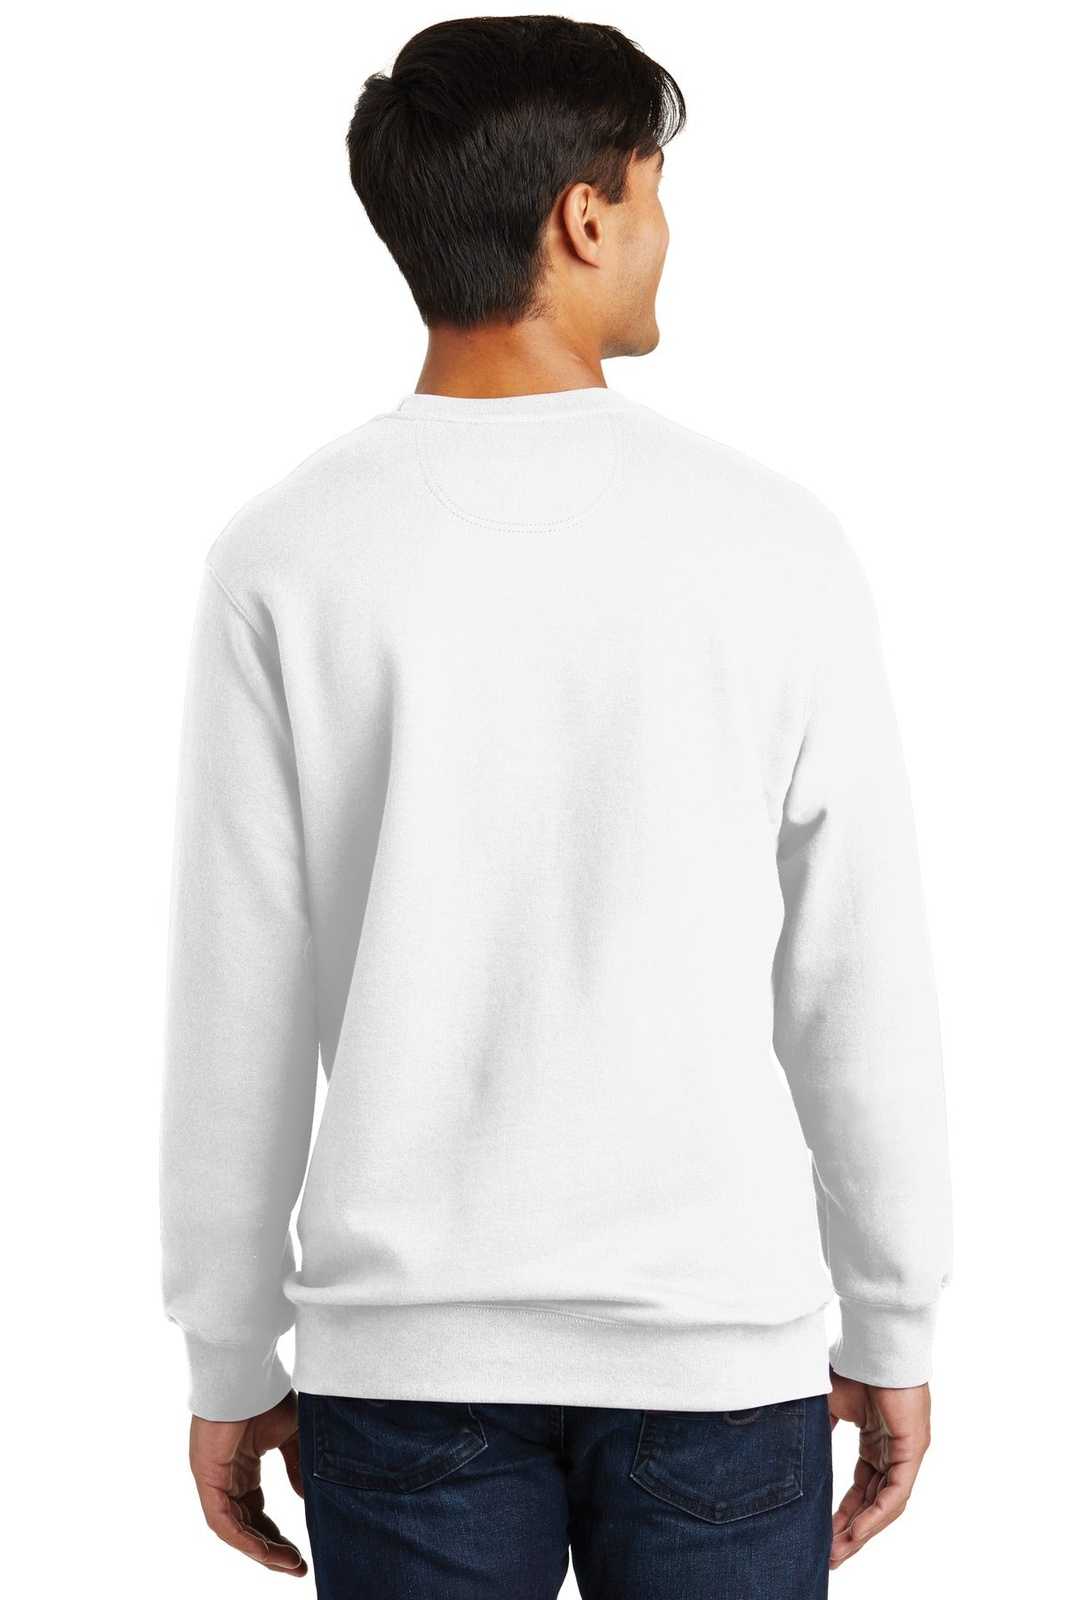 Port & Company PC850 Fan Favorite Fleece Crewneck Sweatshirt - White - HIT a Double - 1